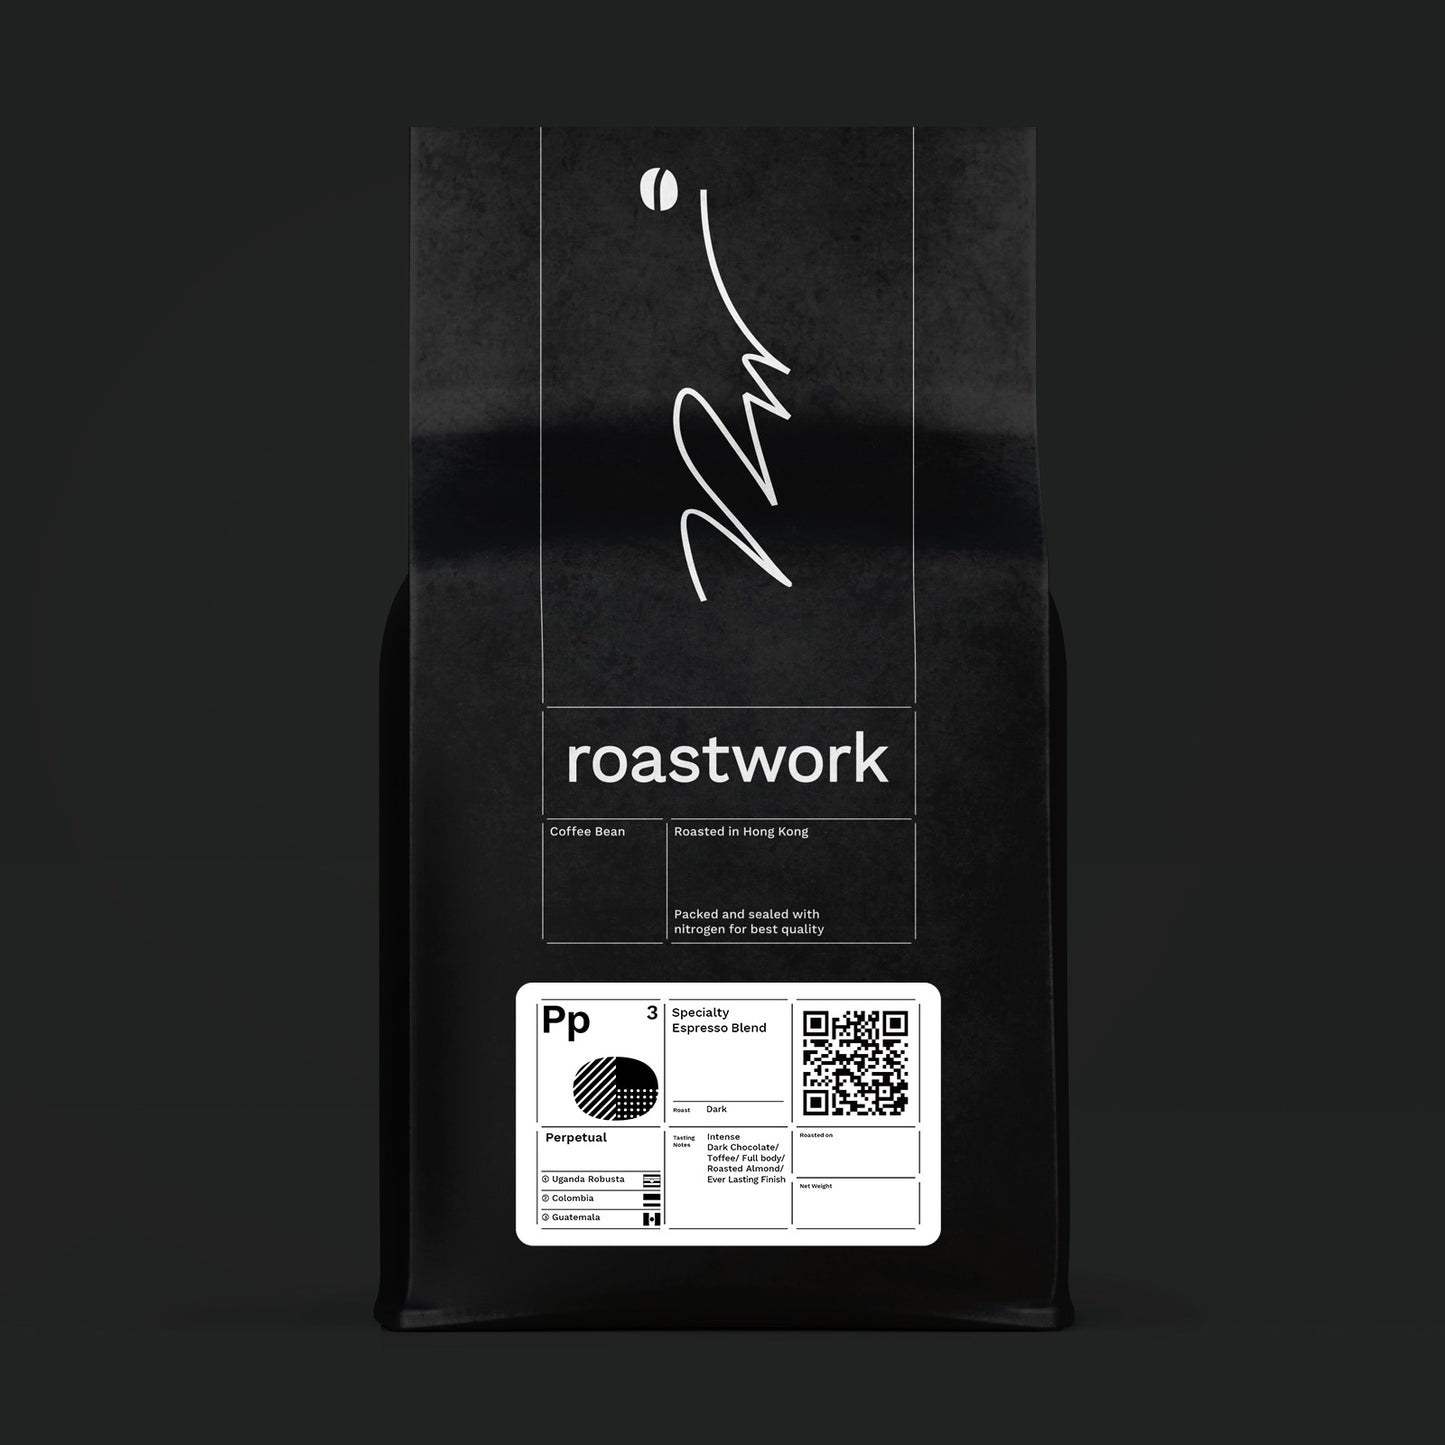 Pp - Perpetual Espresso Blend Dark Roast